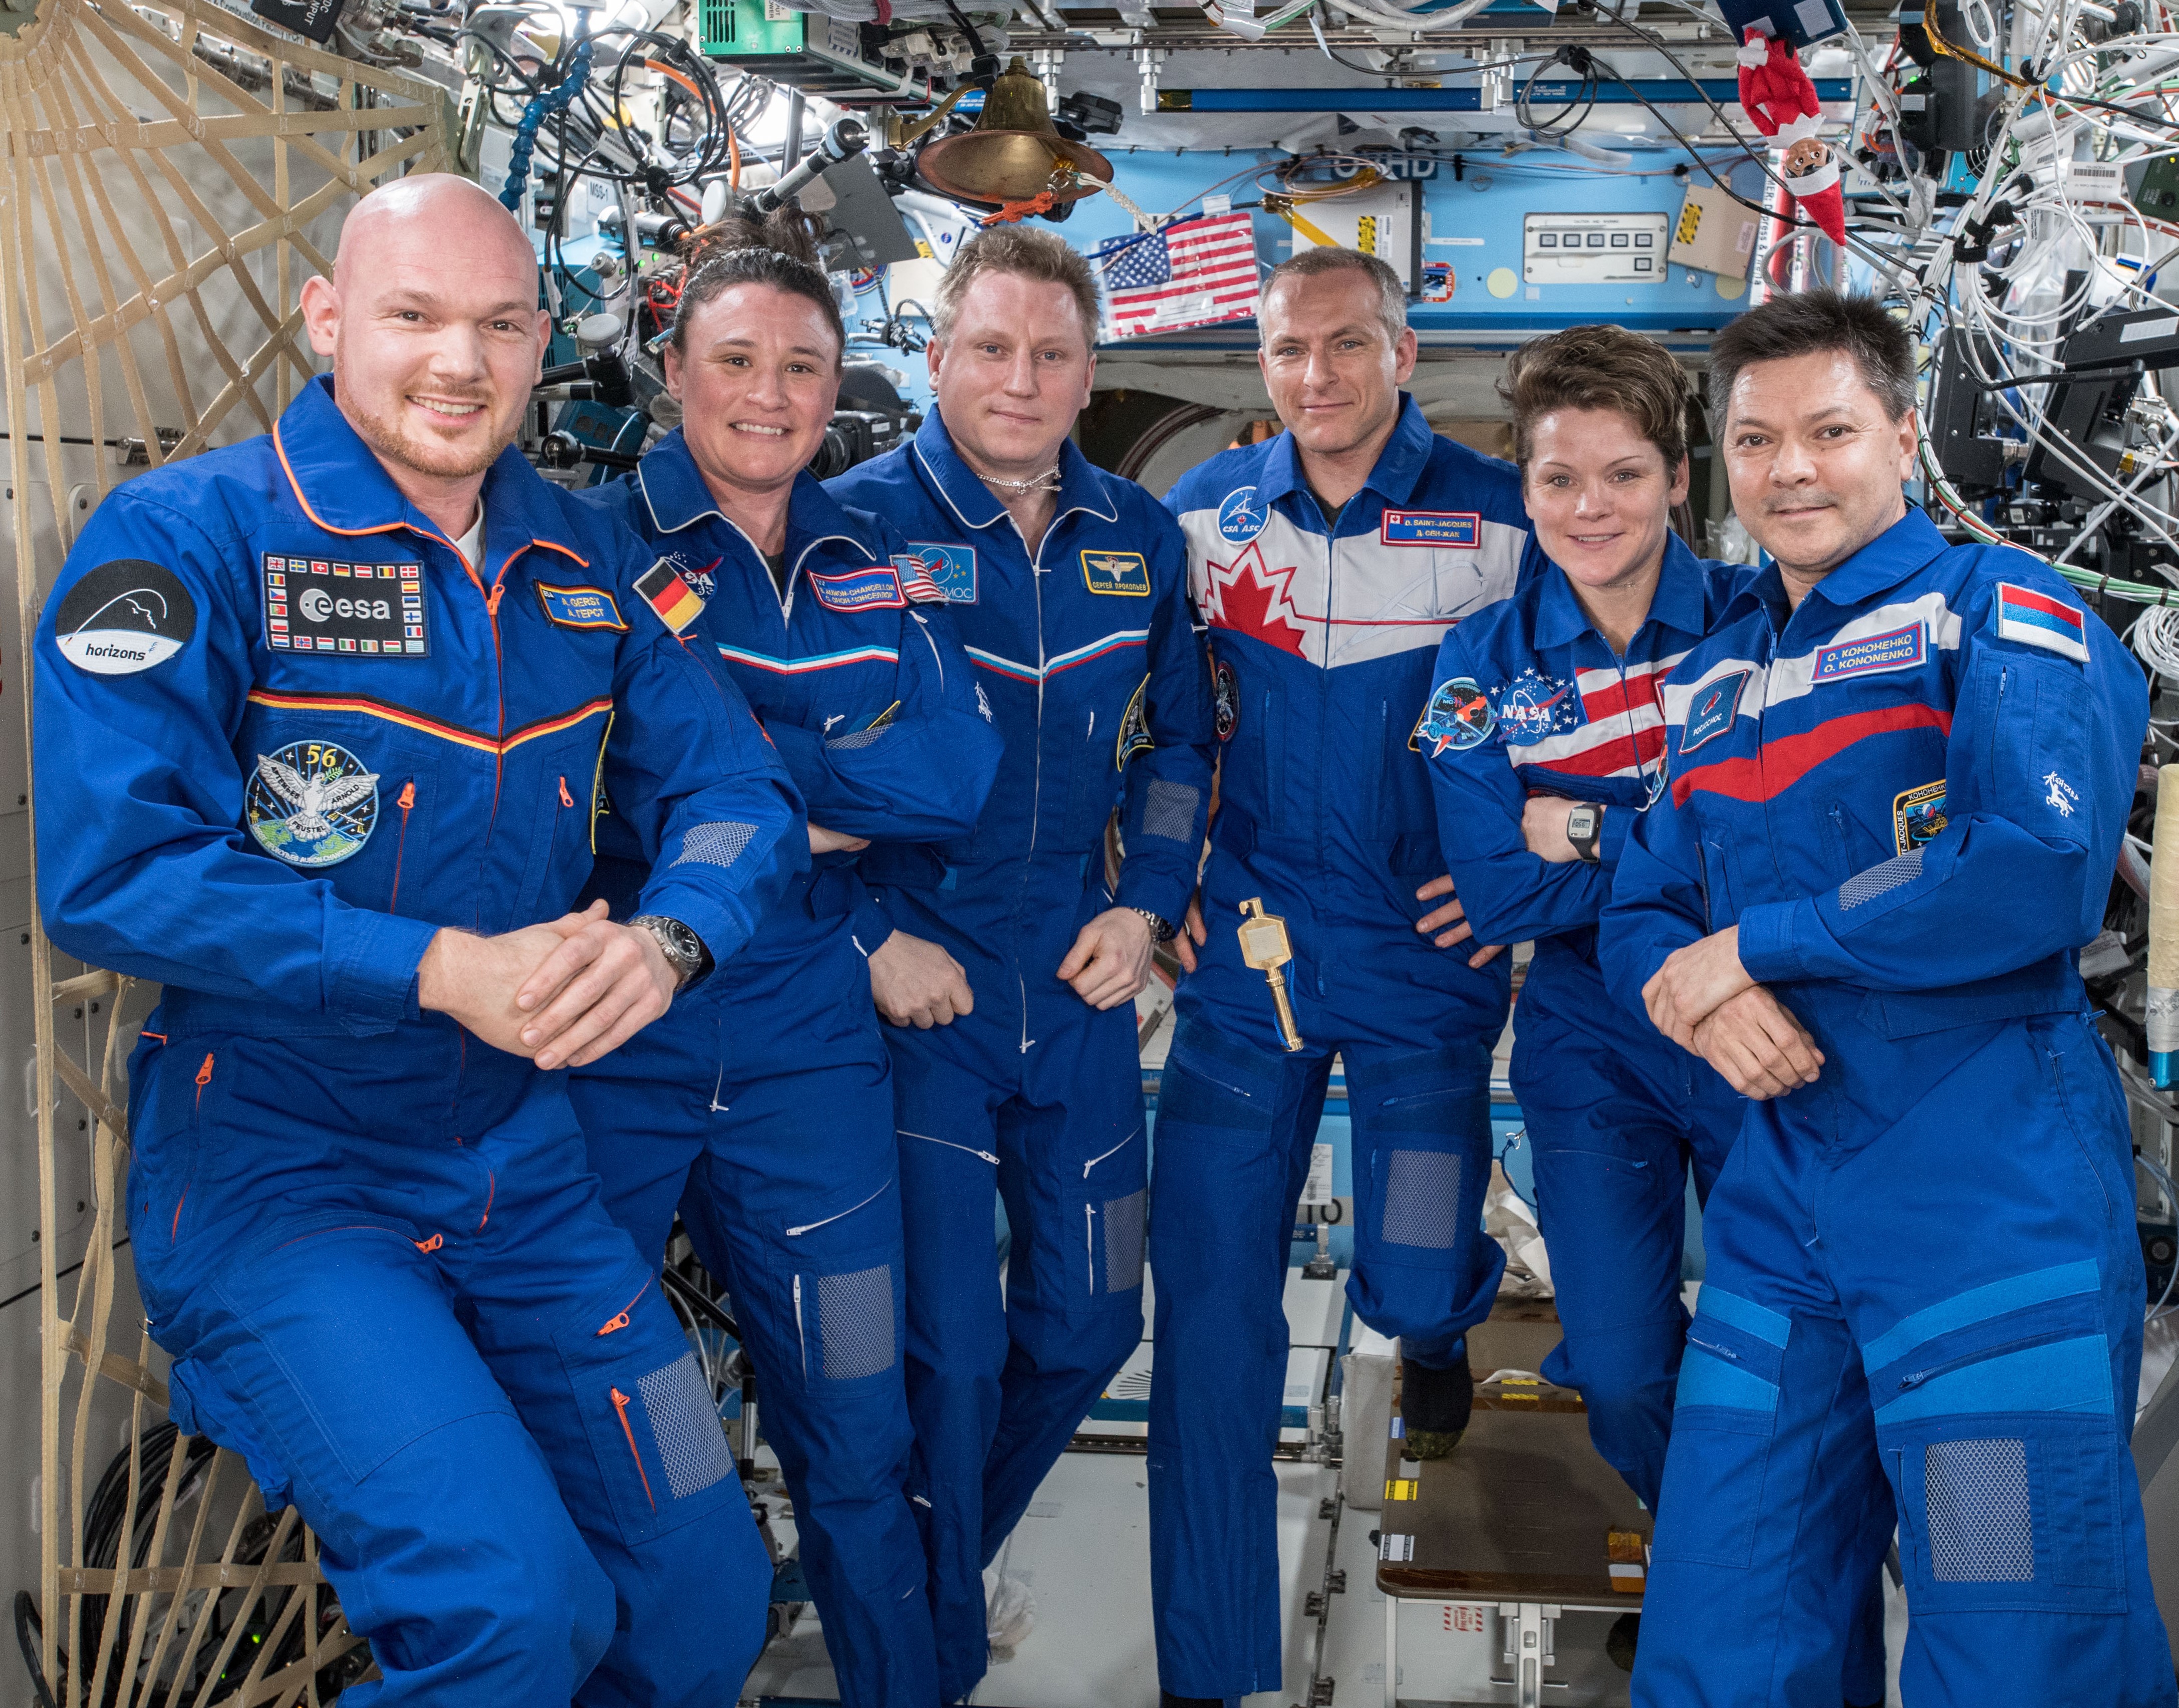 NASA astronaut Serena M. Auñón-Chancellor and her Expedition 57 crewmates in the Destiny module